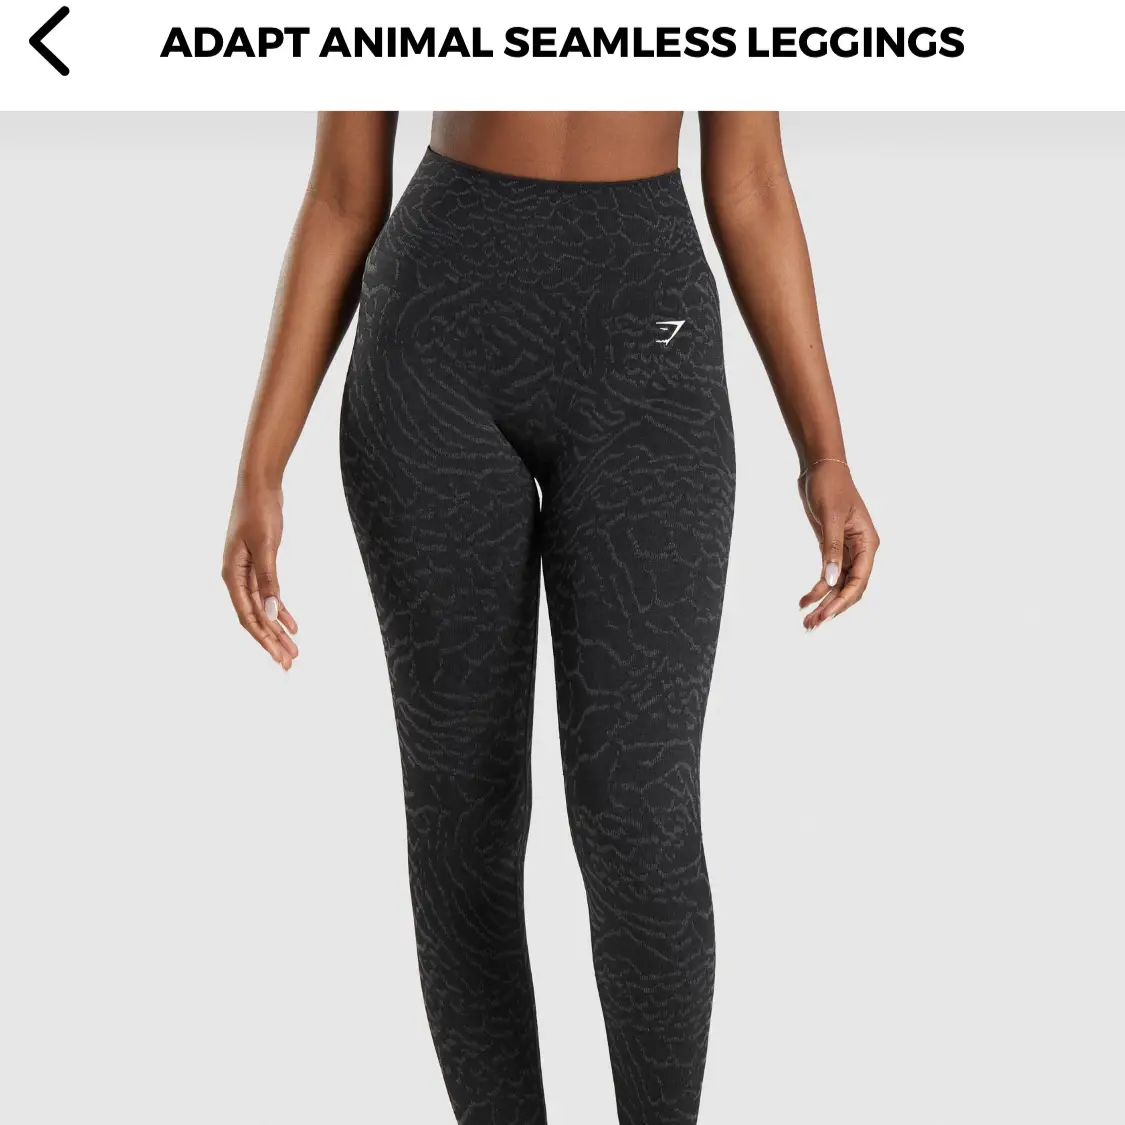 GYMSHARK ADAPT ANIMAL SEAMLESS LEGGINGS  Black patterned leggings, Seamless  leggings, Leggings are not pants